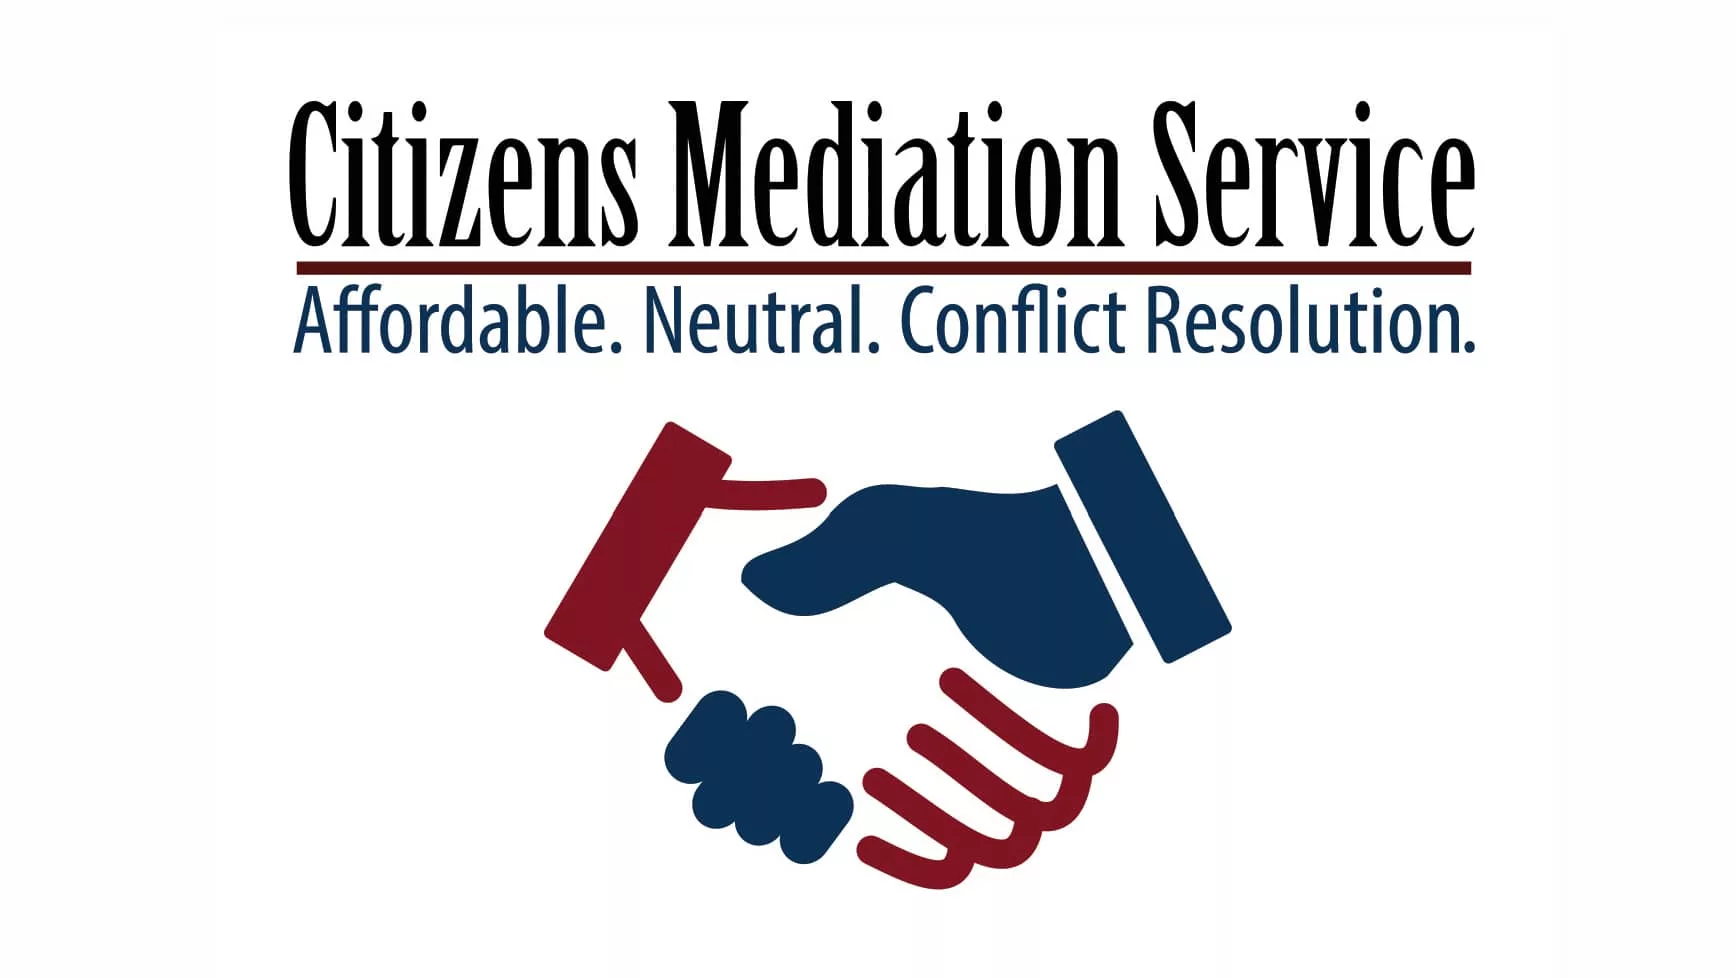 CitizensMediationServiceLogo.webp